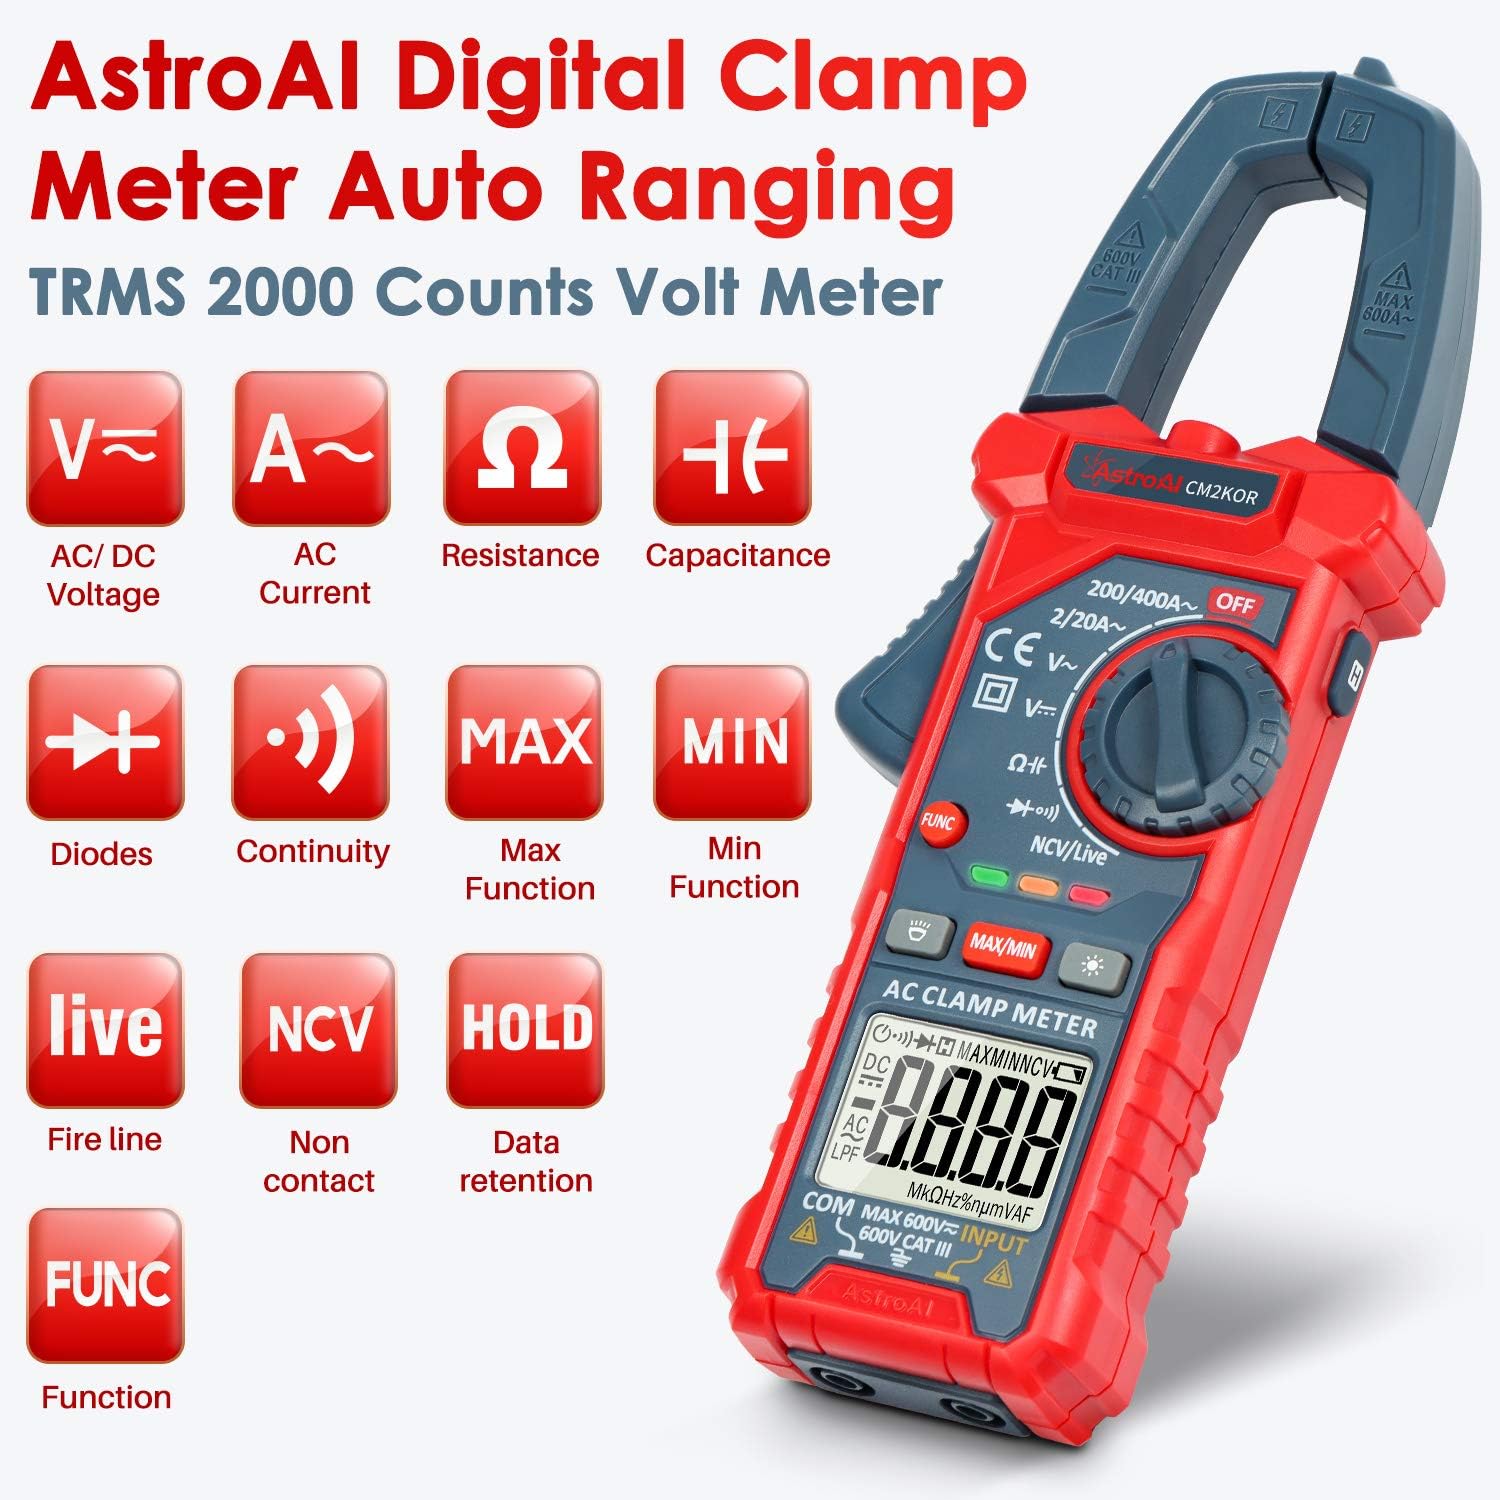 AstroAI Digital Clamp Meter Multimeter 2000 Counts Amp Voltage Tester Auto-ranging with AC/DC Voltage, AC Current, Resistance, Capacita